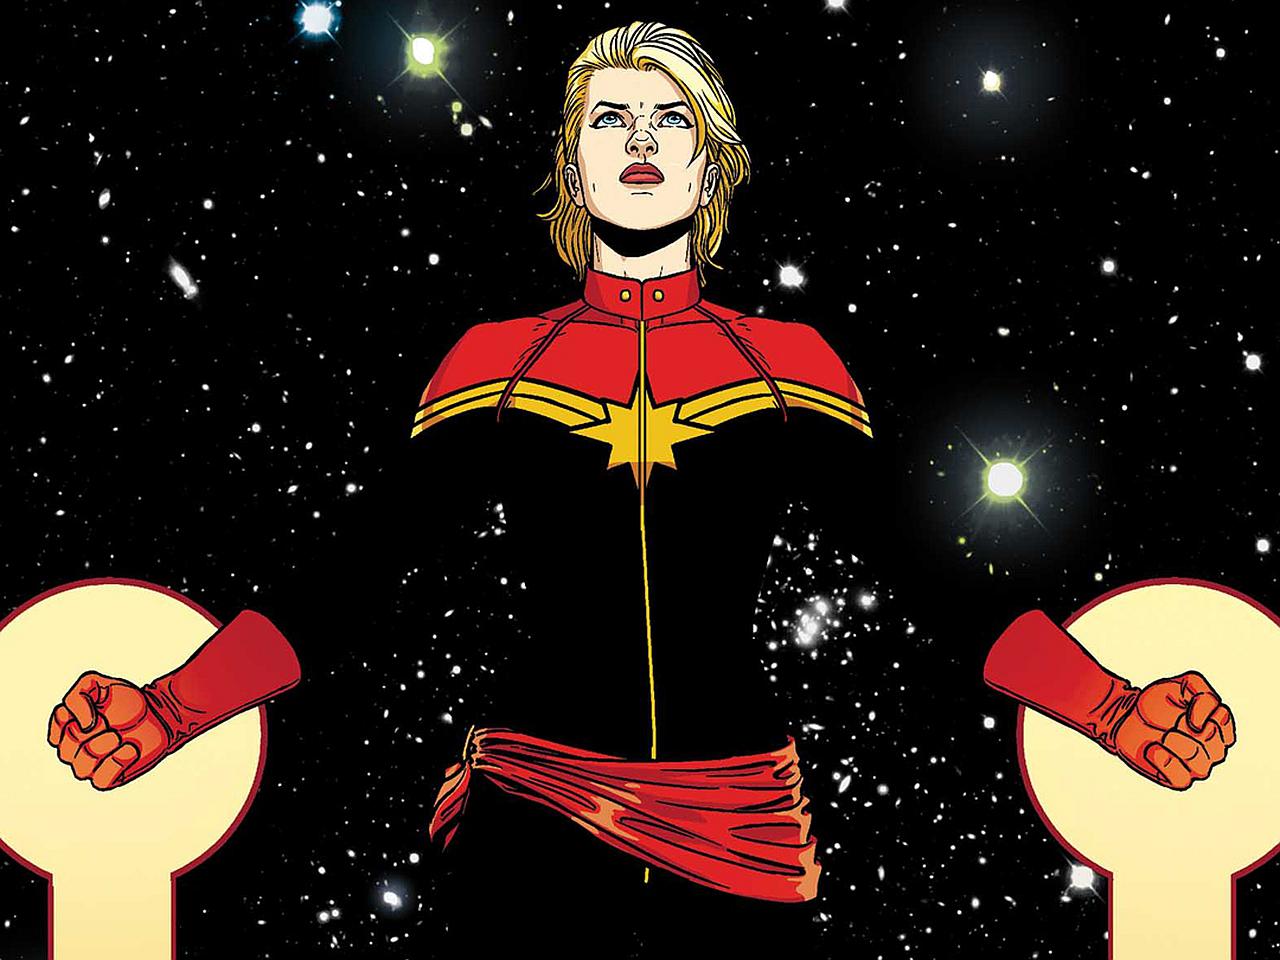 Nicole Perlman & Meg LeFauve Officially Writing Marvel's Captain Marvel